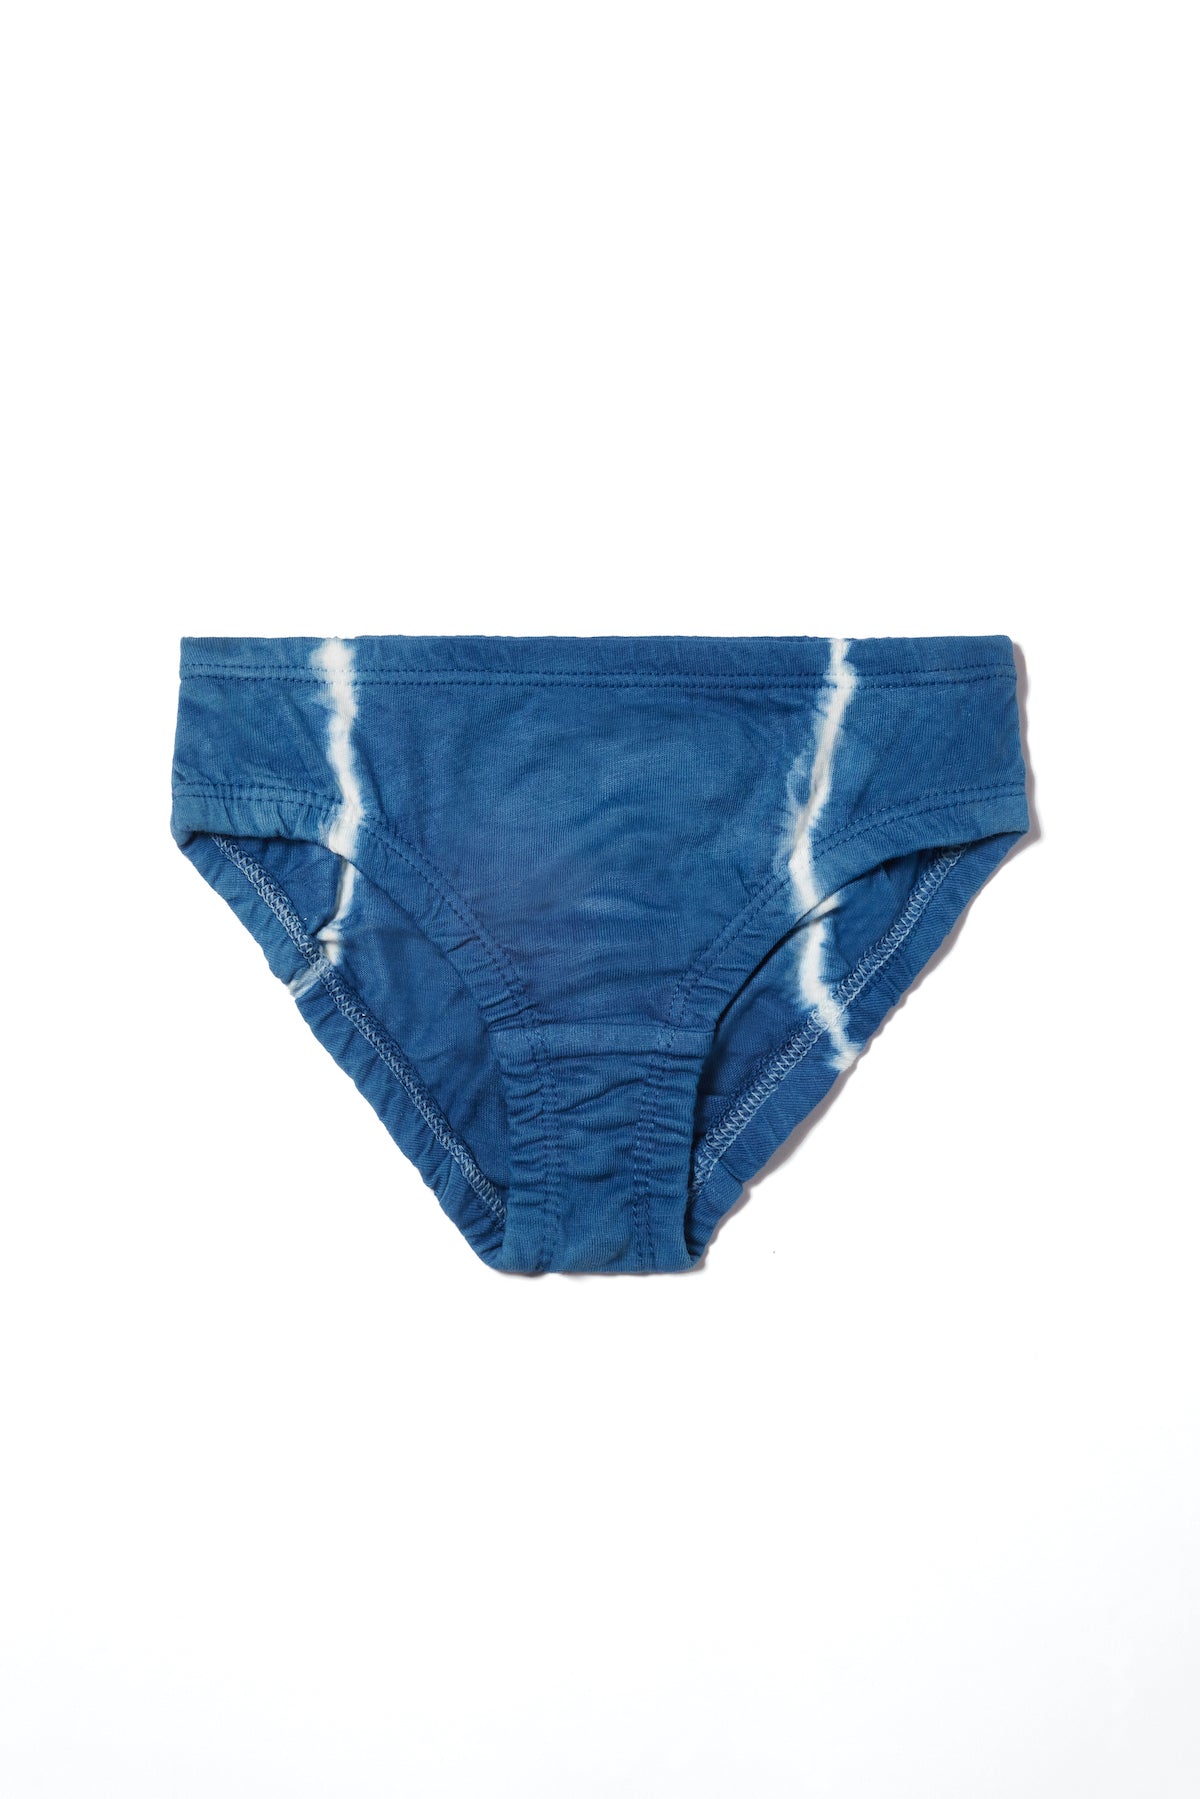 Girls Organic Cotton Hipster Underwear | Kid Panties | Naturally Dyed |  Indigo | Chemical-free & Spandex-free